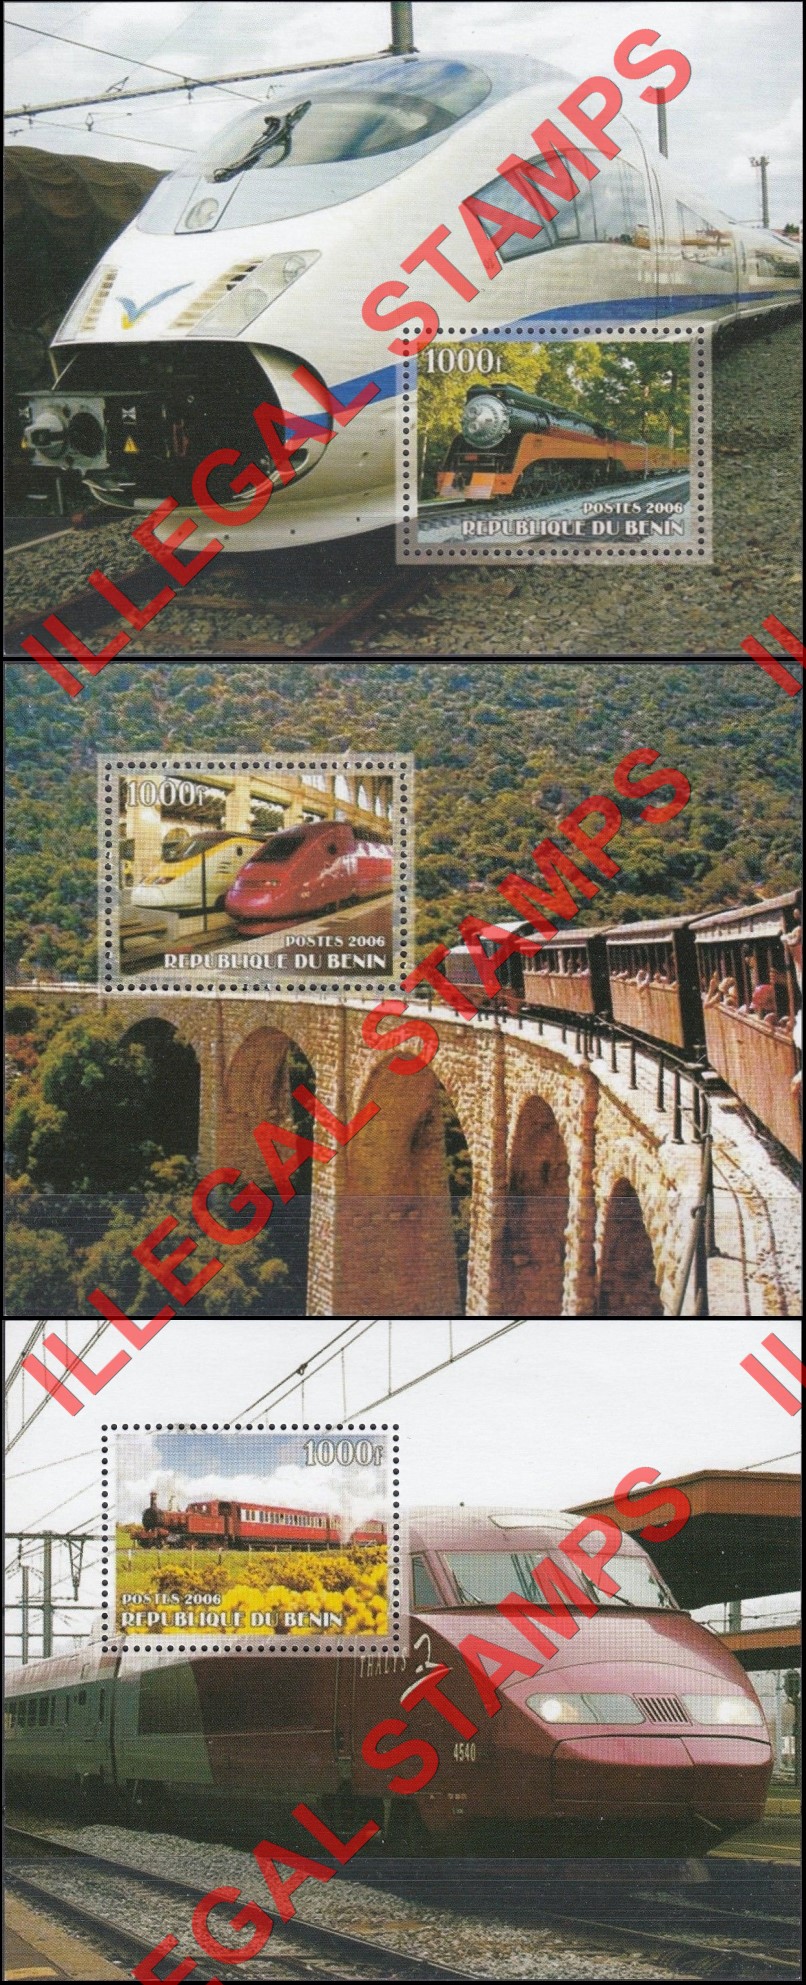 Benin 2006 Trains Illegal Stamp Souvenir Sheets of 1 (Part 1)